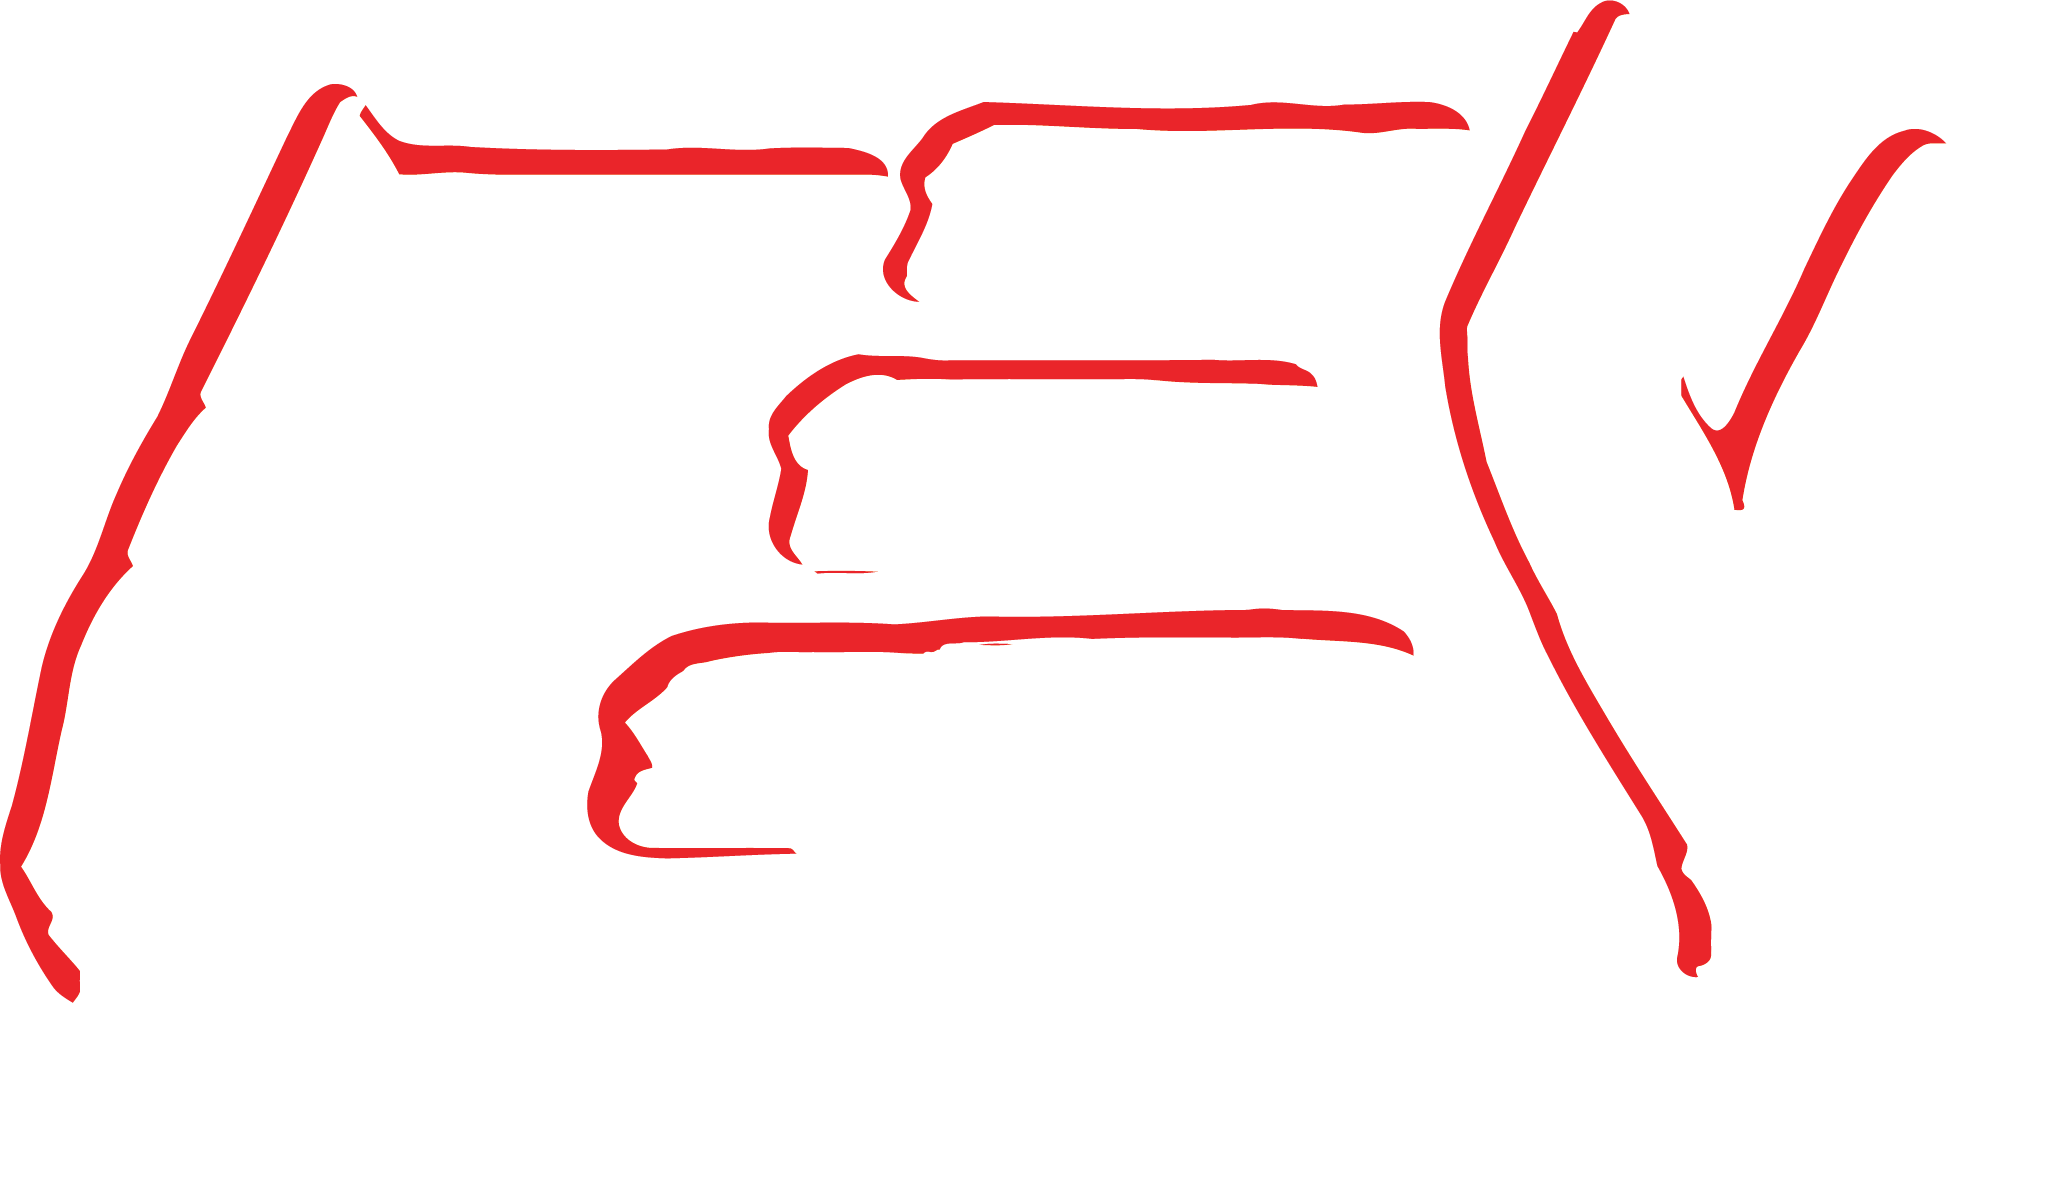 Rev Theory Merchandise